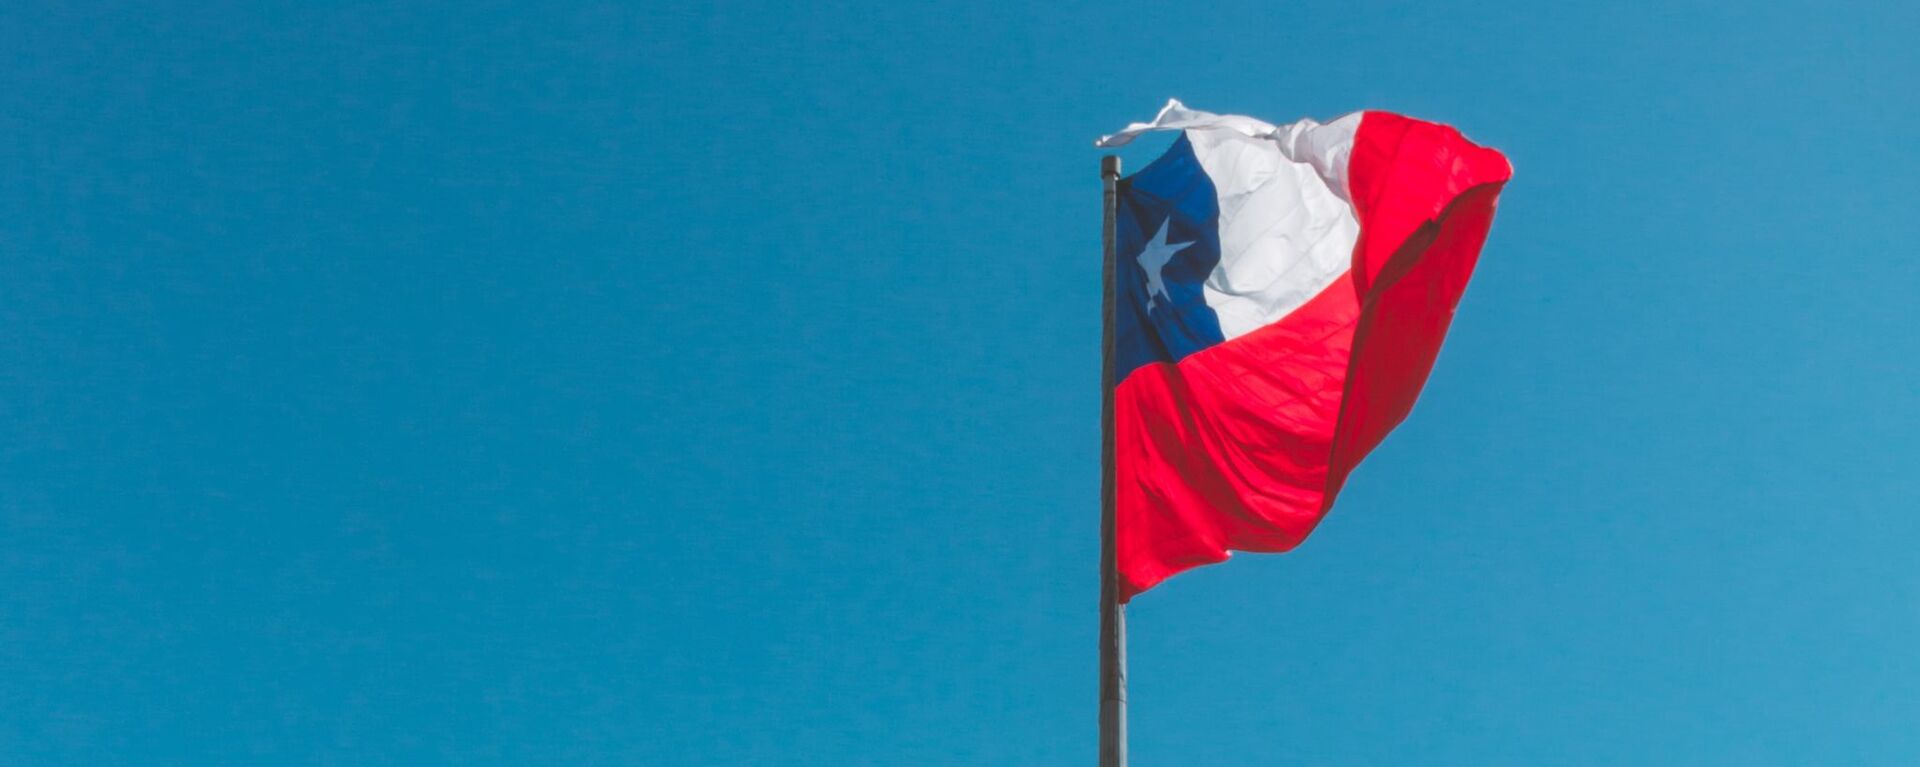 La bandera de Chile - Sputnik Mundo, 1920, 13.11.2020